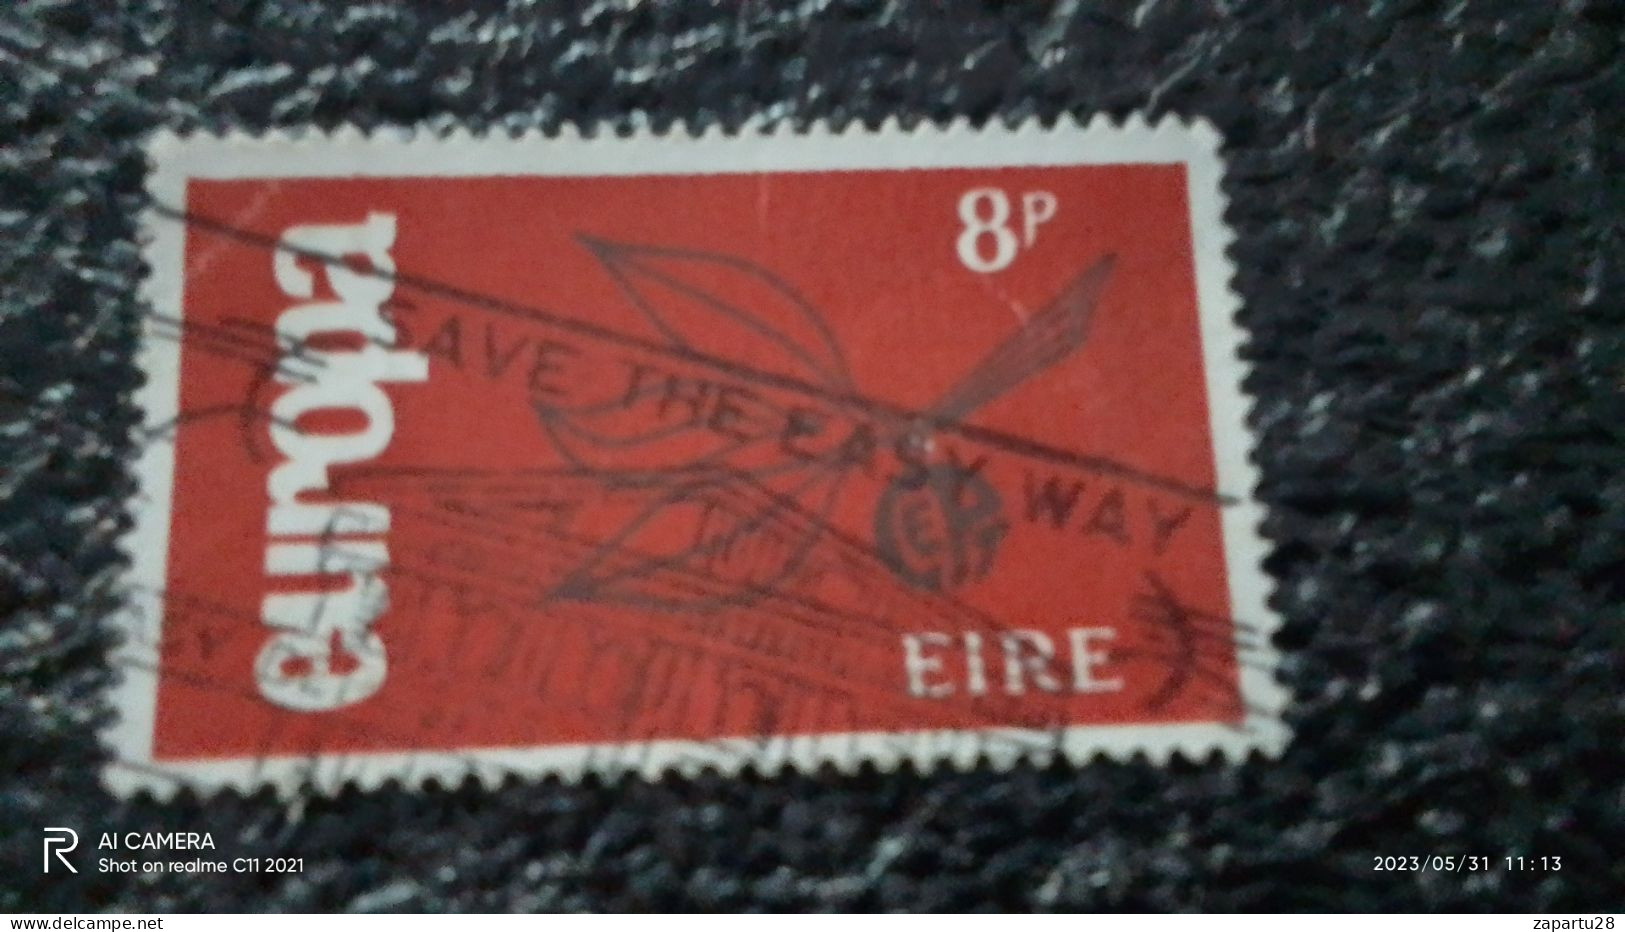 IRLANDA--1950-75            8P       USED - Oblitérés